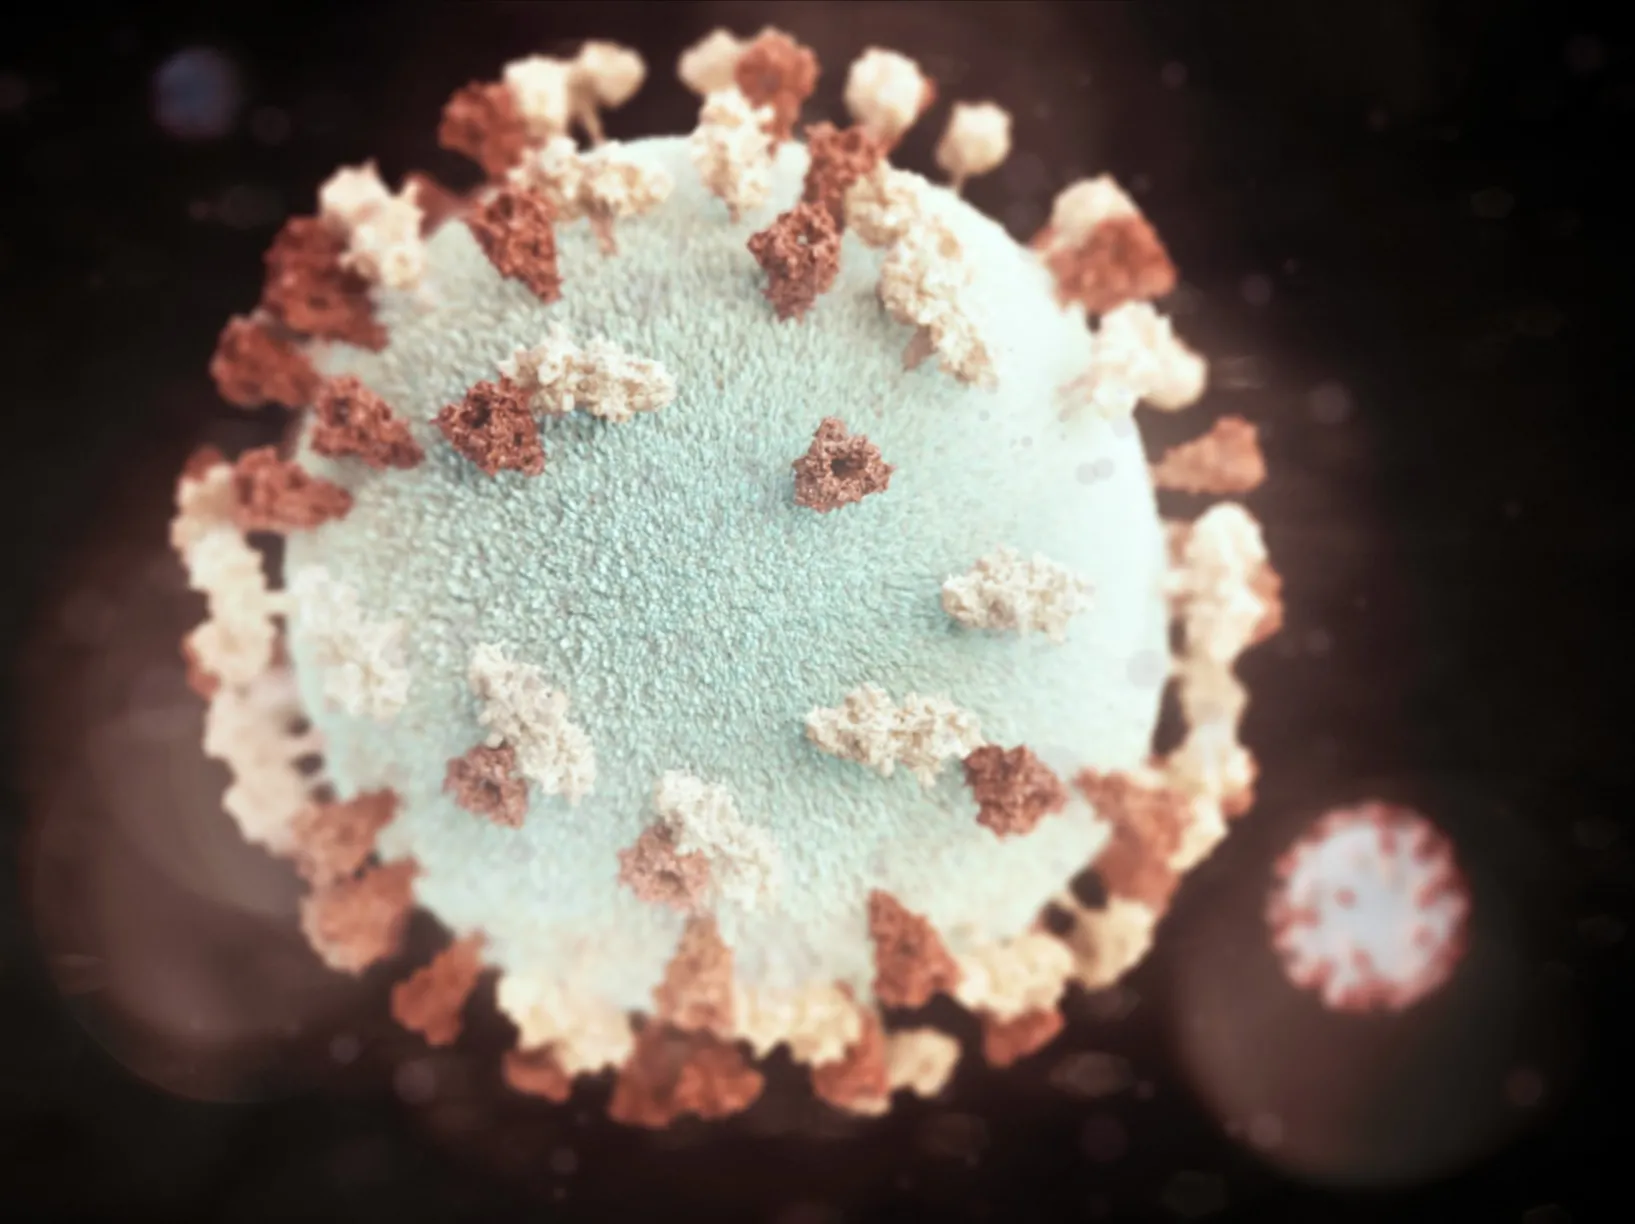 Close-up of mumps virus